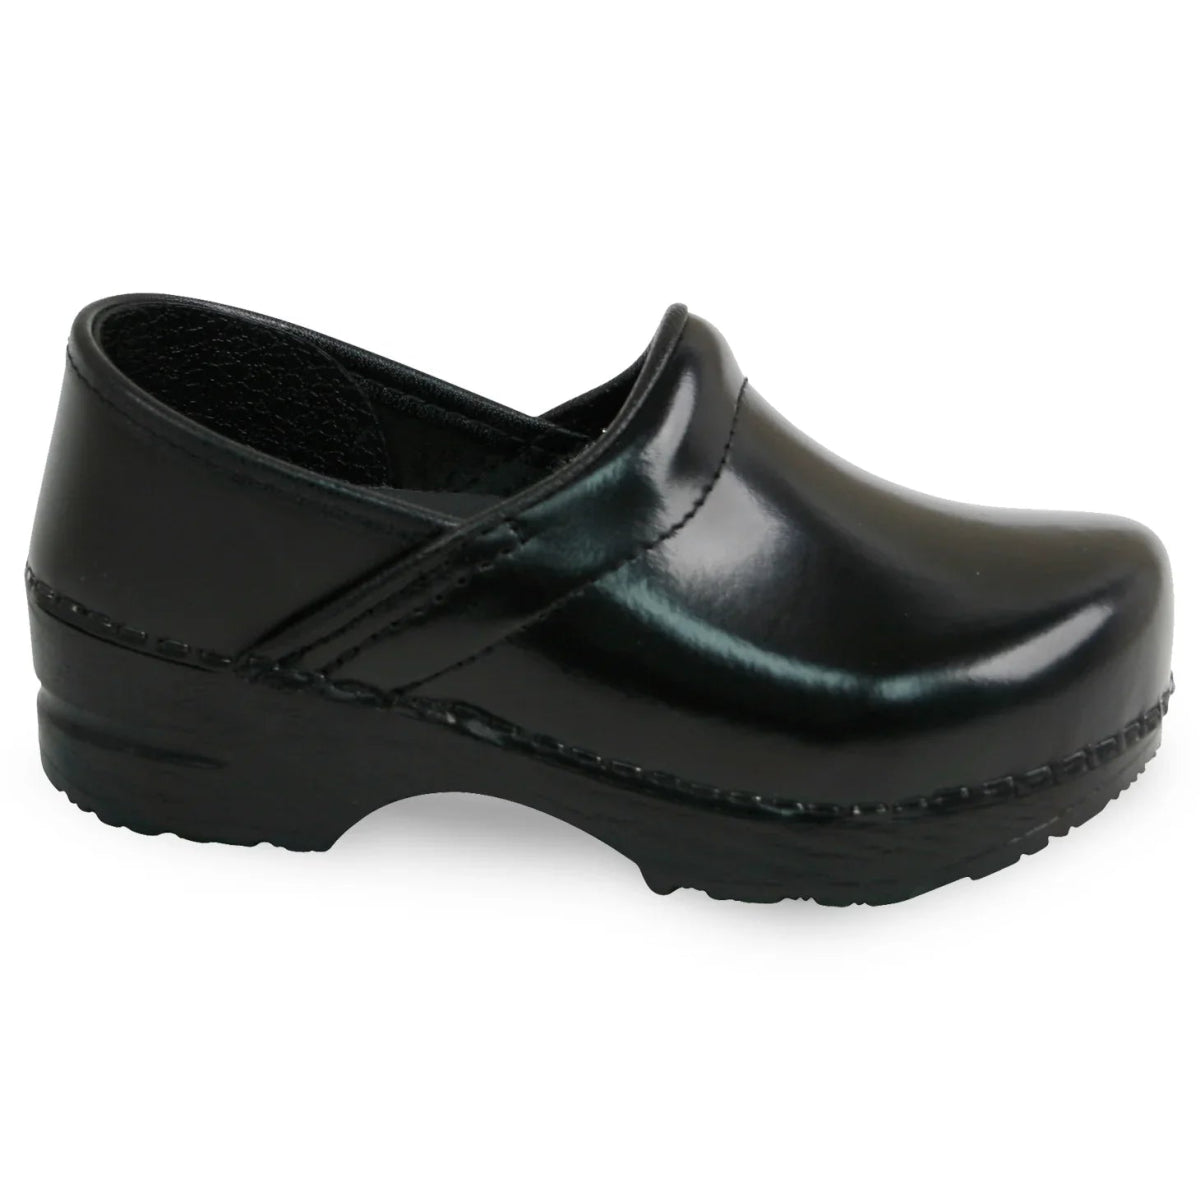 SANITA GITTE CABRIO KID CLOG IN BLACK - TLW Shoes